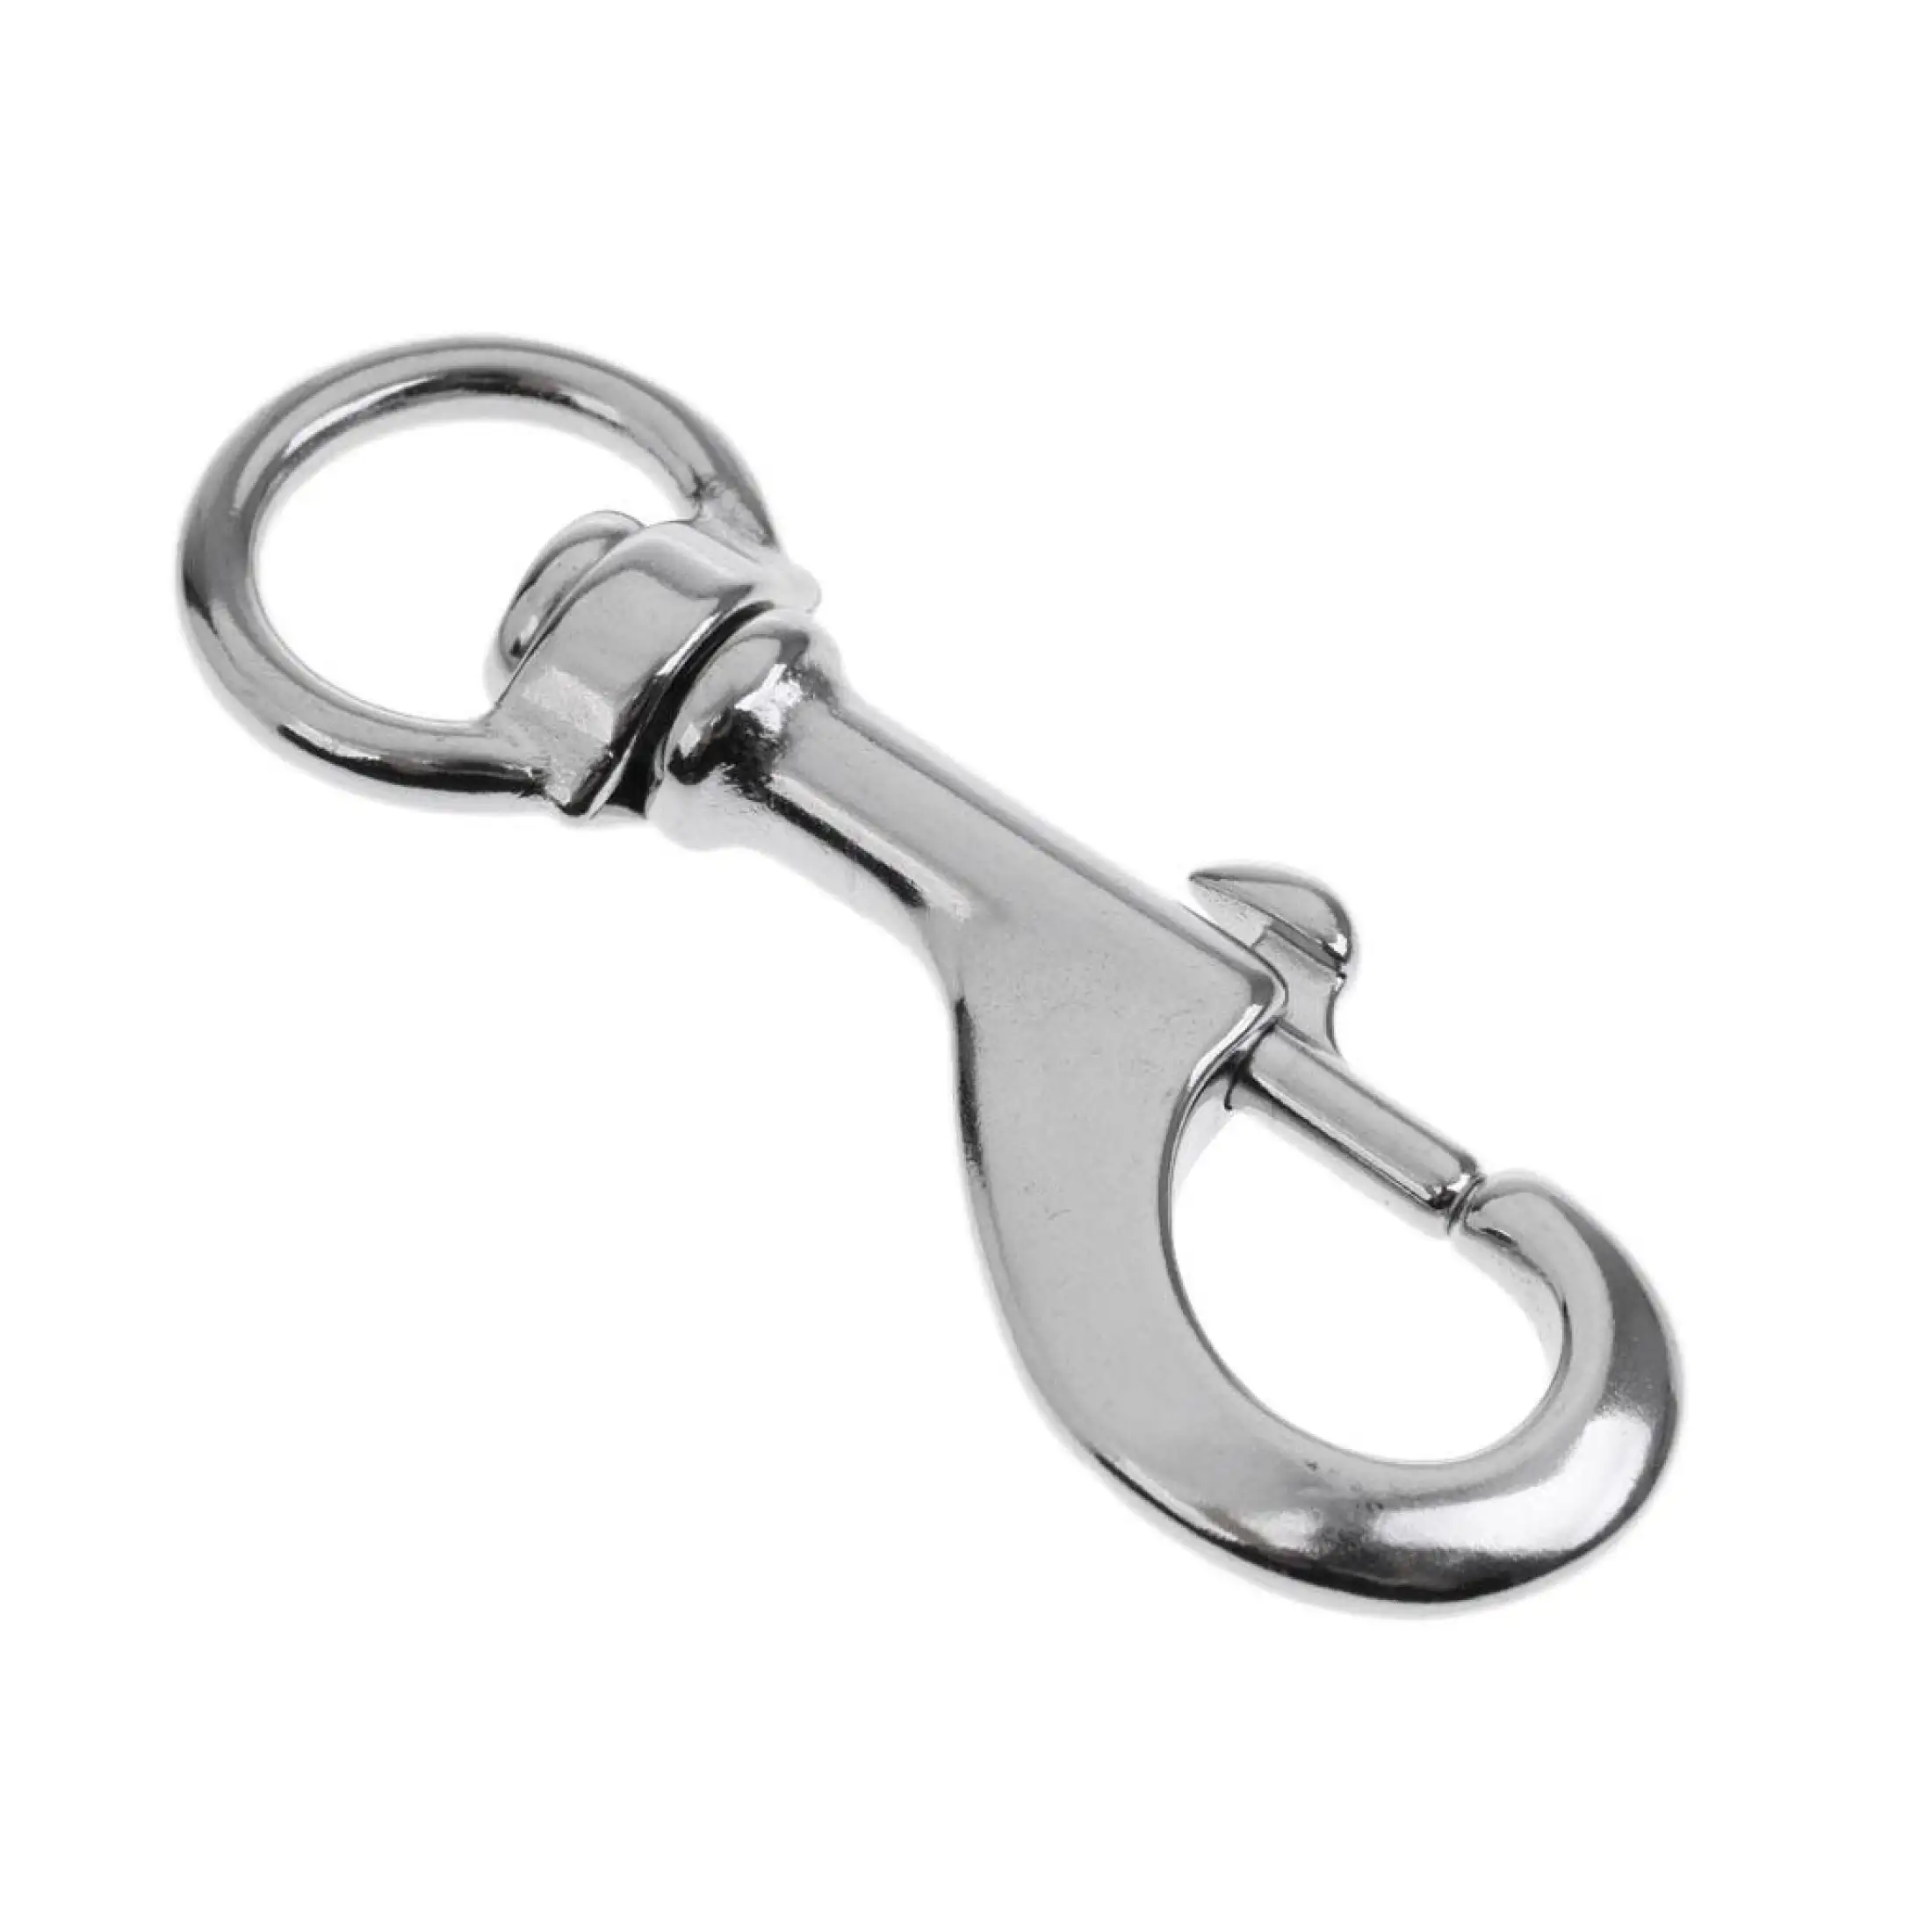 6x Stainless Steel Swivel Round Eye Bolt Snap Key Chain Clip 80/68mm Length